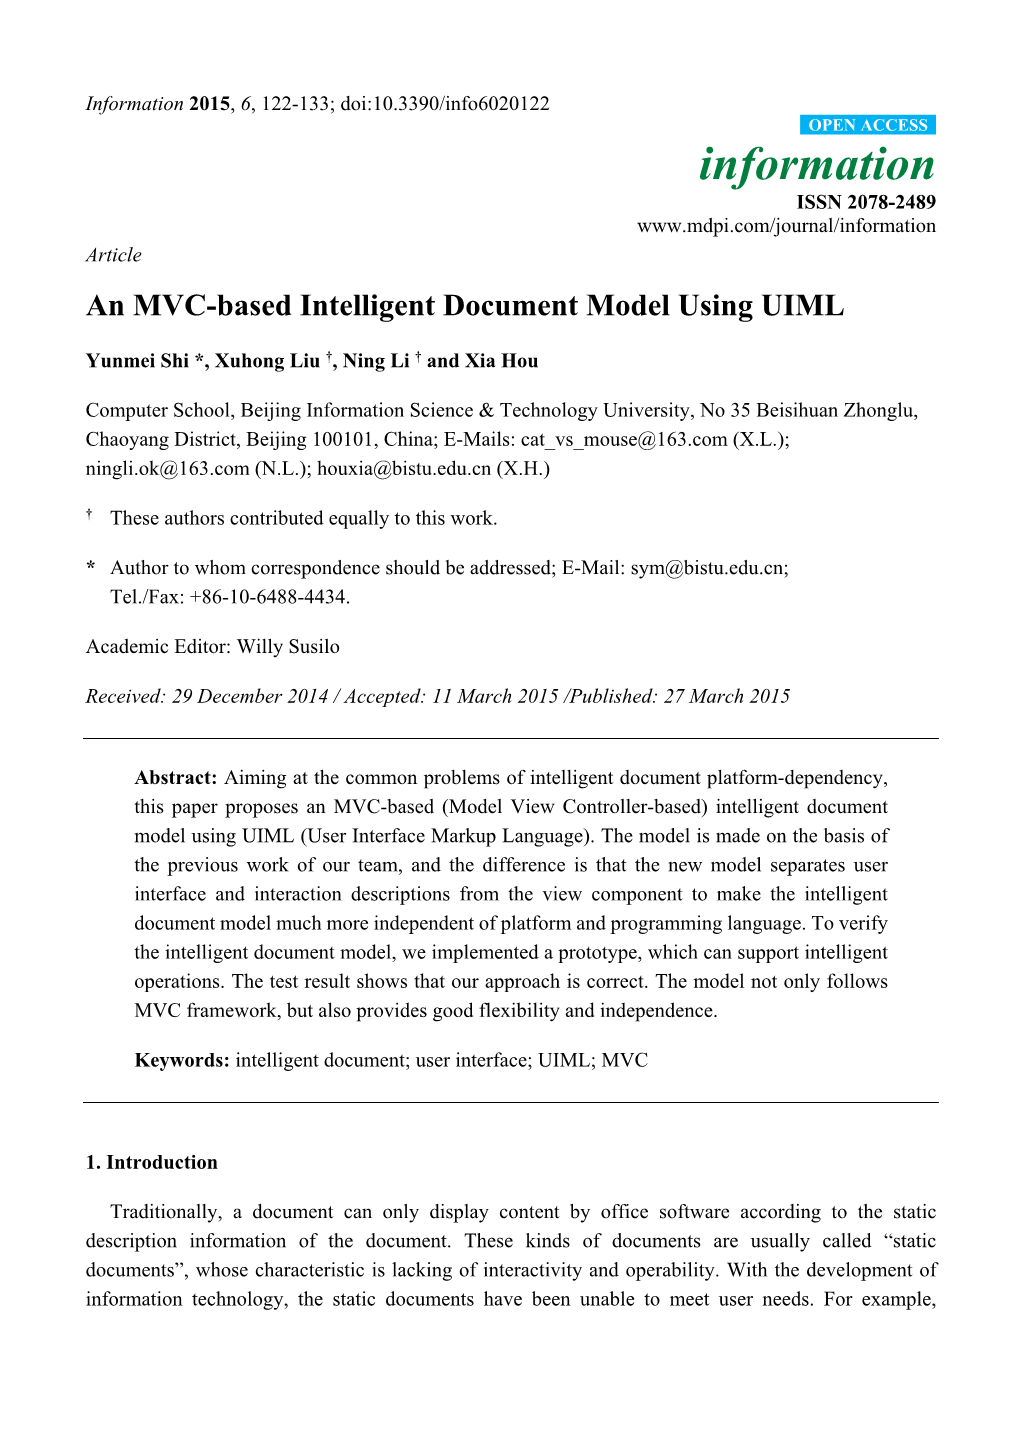 An MVC-Based Intelligent Document Model Using UIML